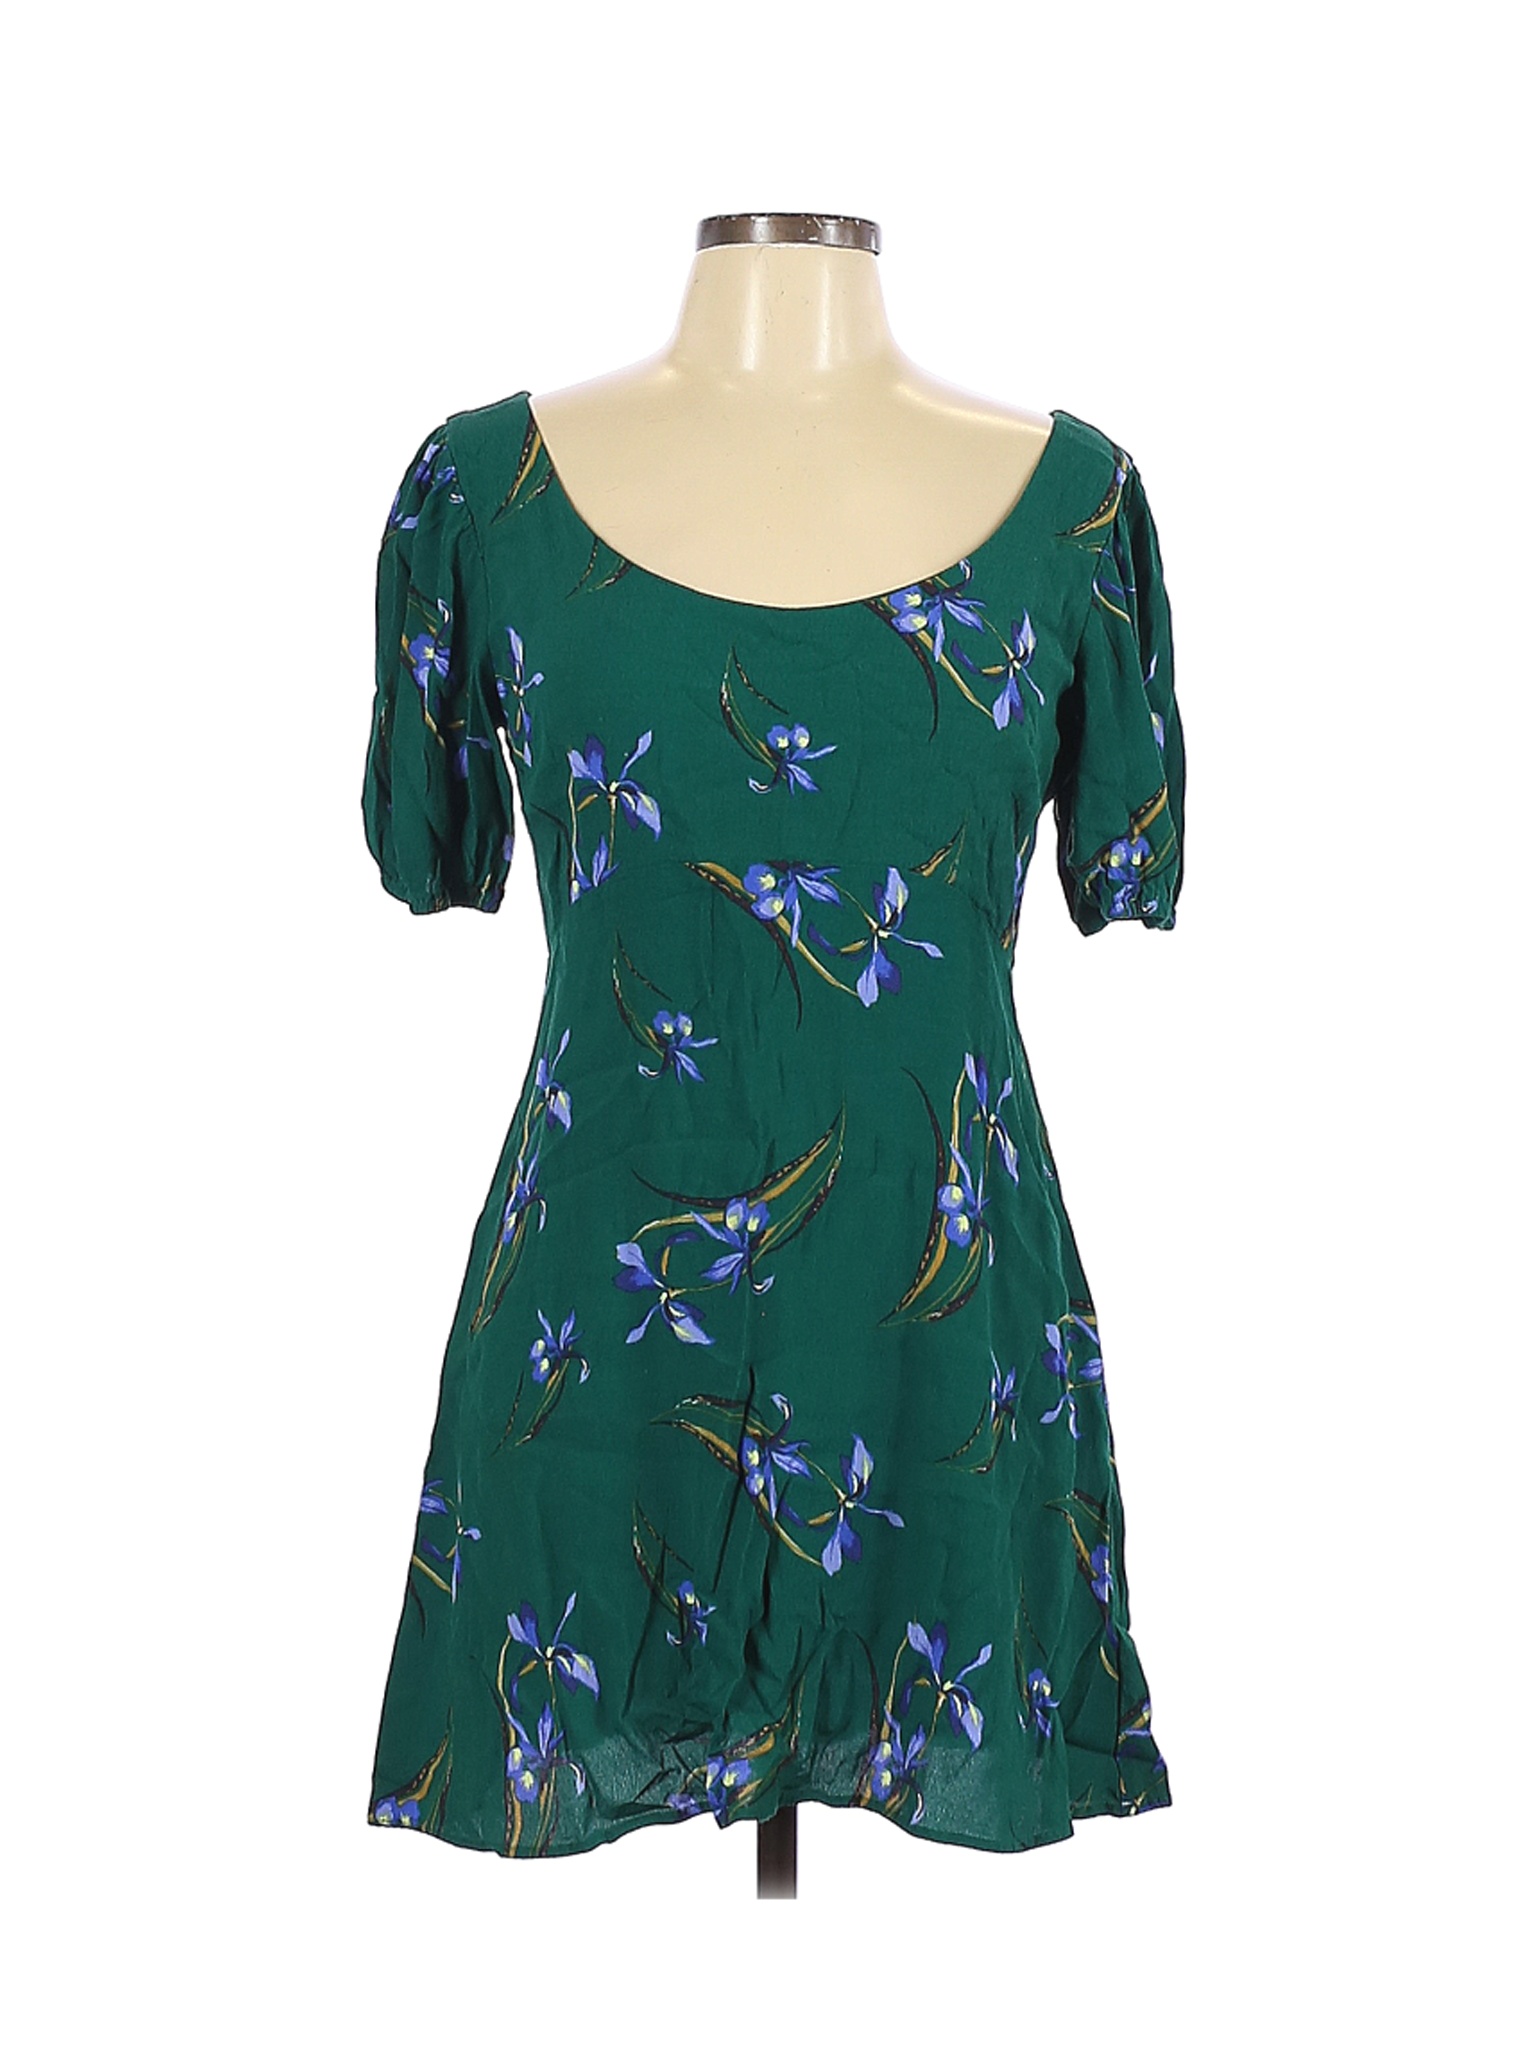 Urban Outfitters Women Green Casual Dress L | eBay